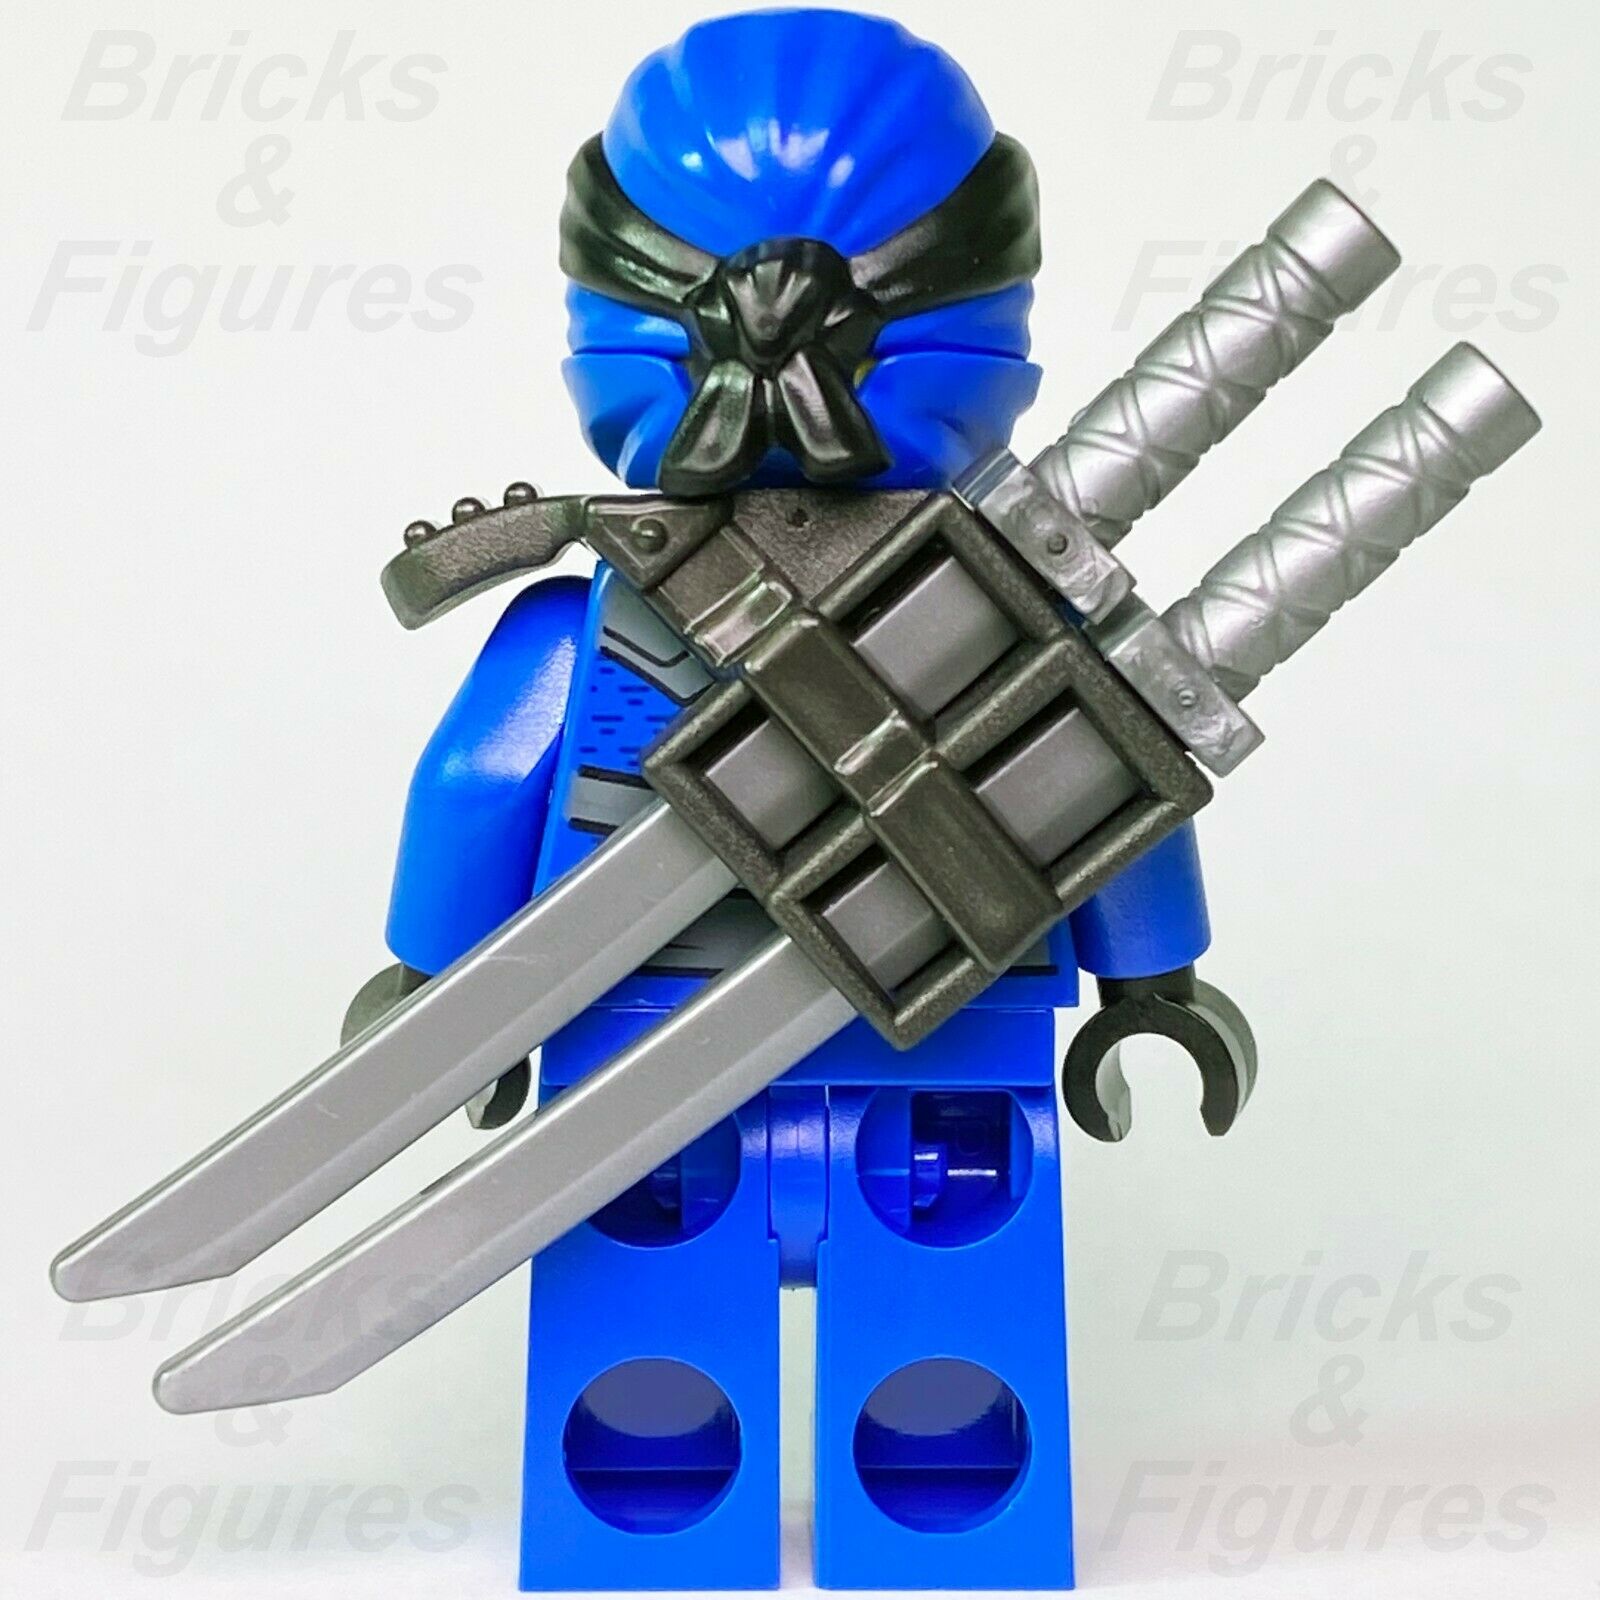 New Ninjago LEGO Jay Sons of Garmadon Blue Lightning Ninja Minifigure 70642 - Bricks & Figures